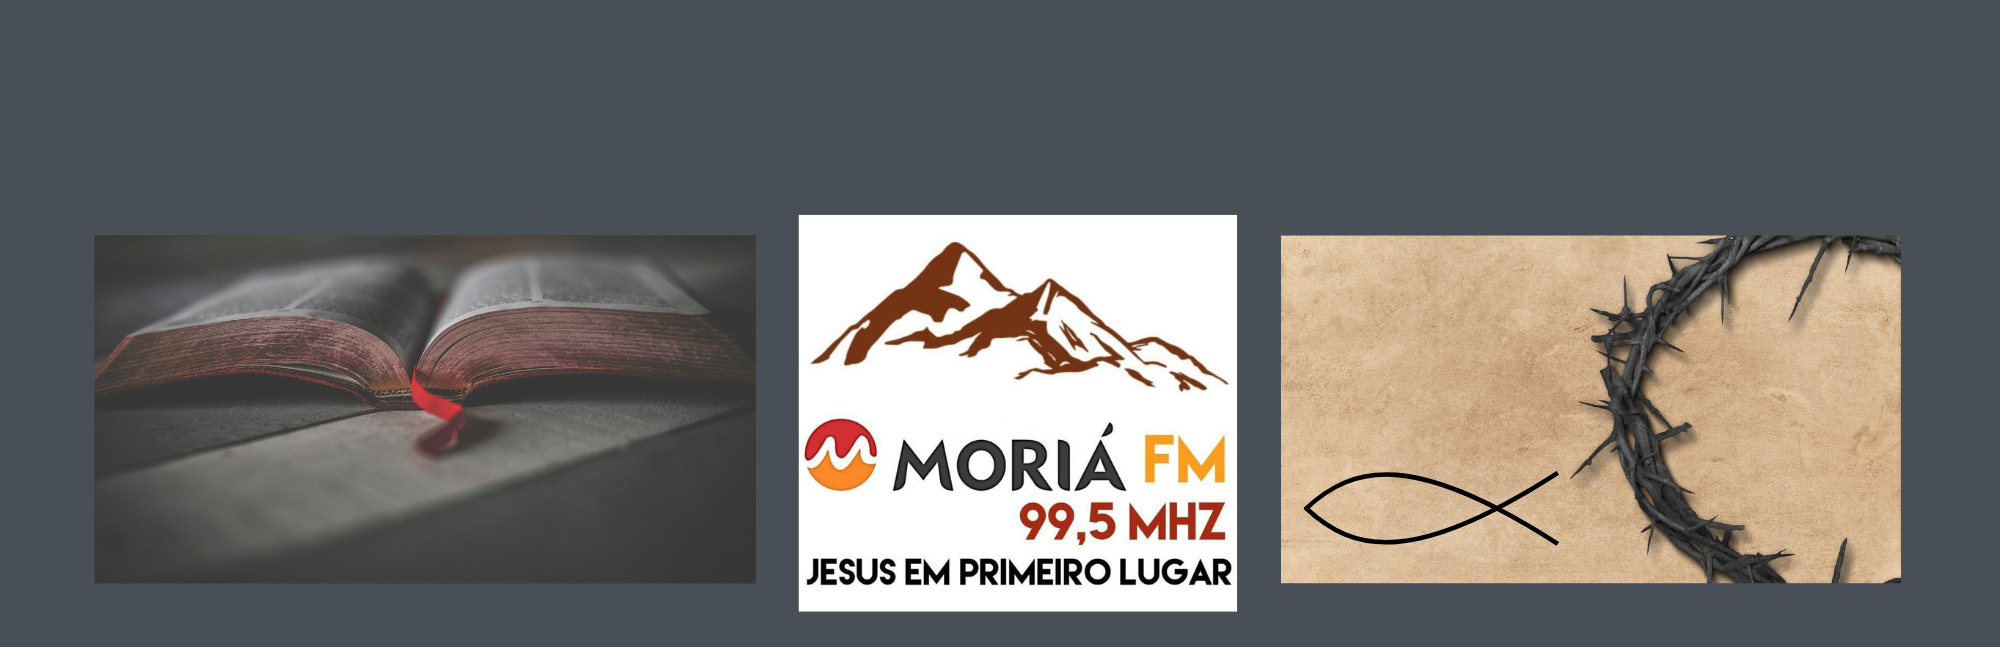 Moira FM